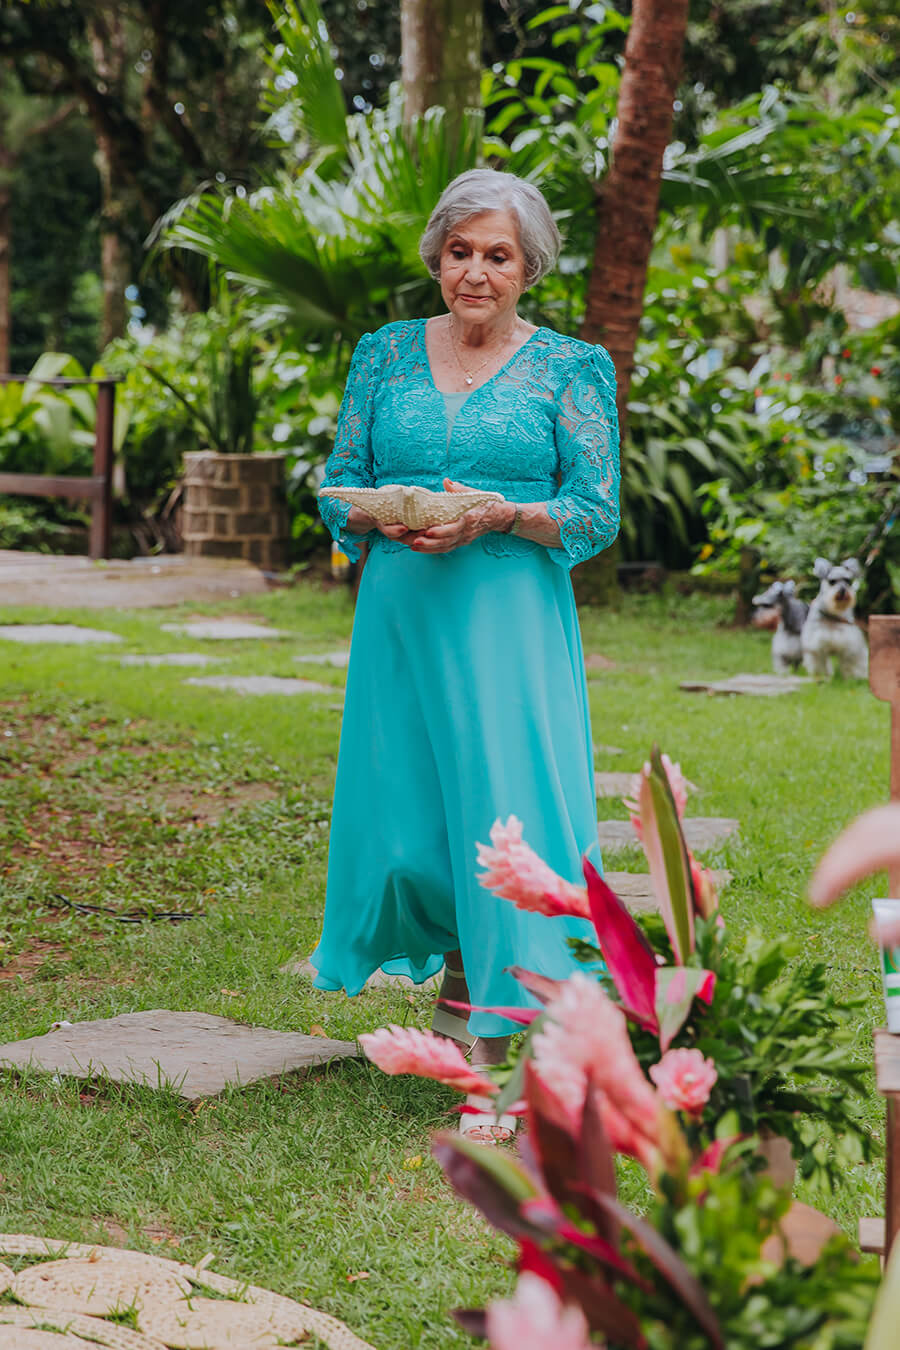 Micro Wedding com cerimônia íntima no jardim da Vila Siriúba